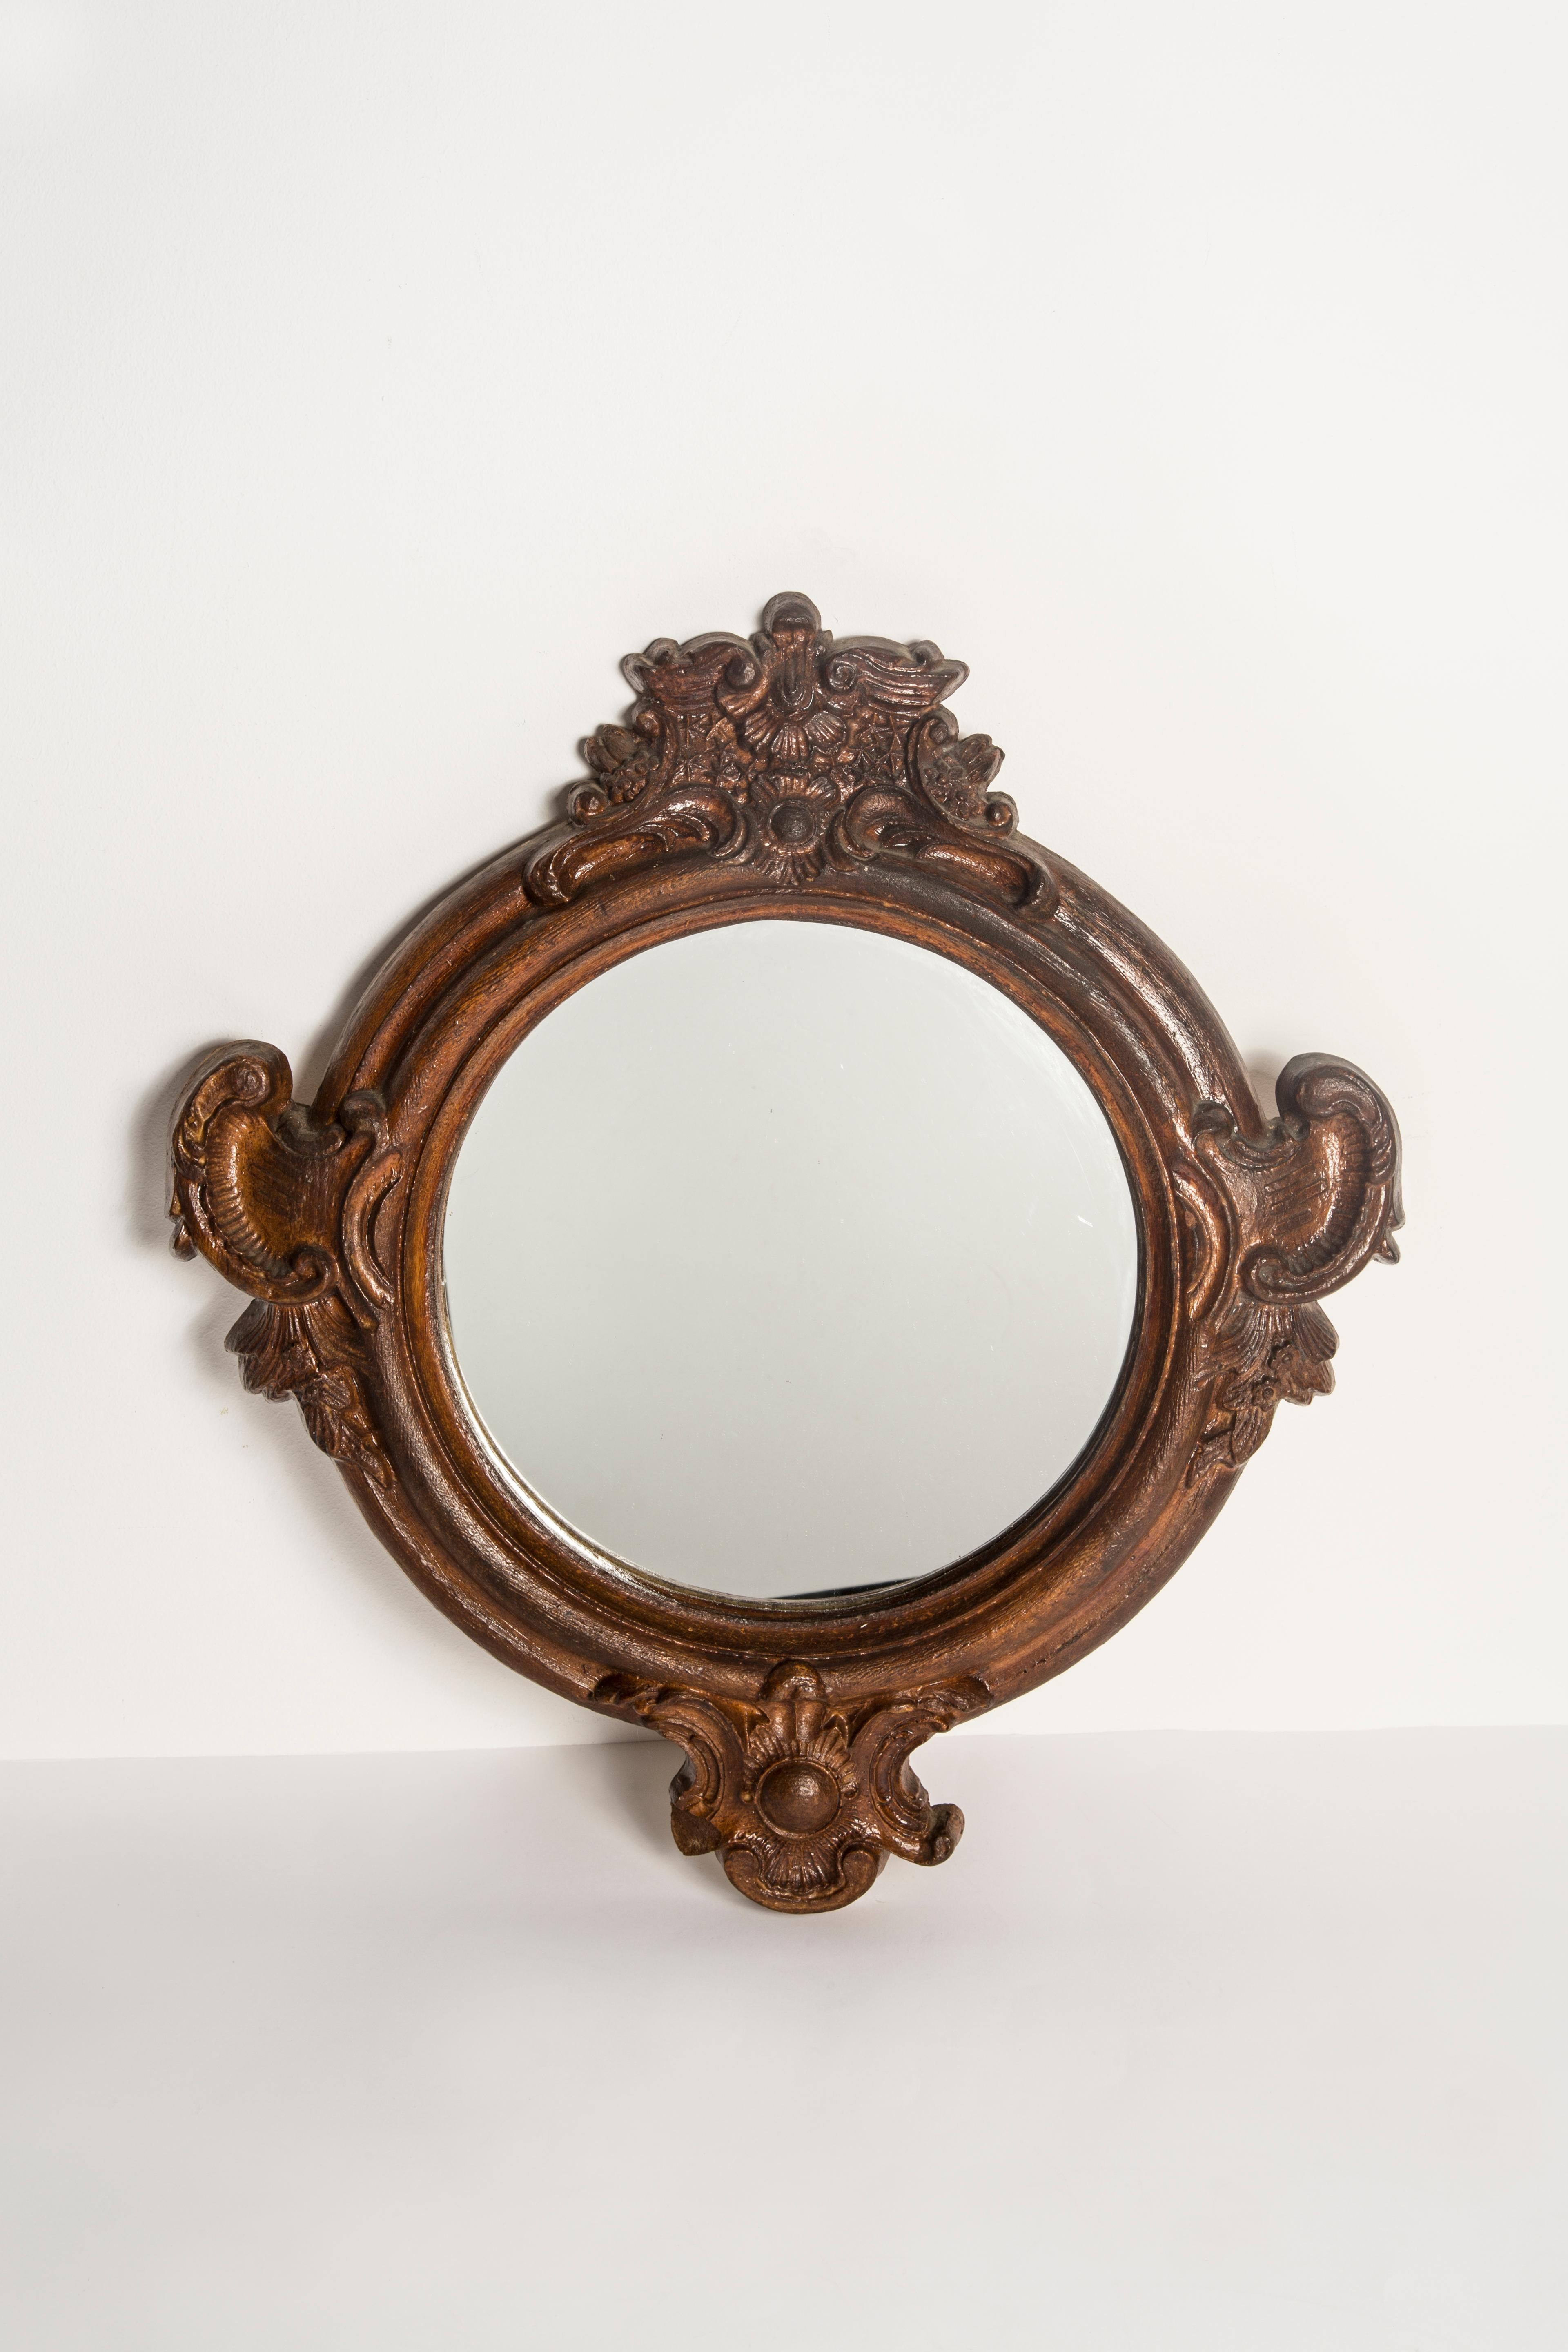 Medium Decorative Brown Original Glass Mirror, Europe, 1960s For Sale 2